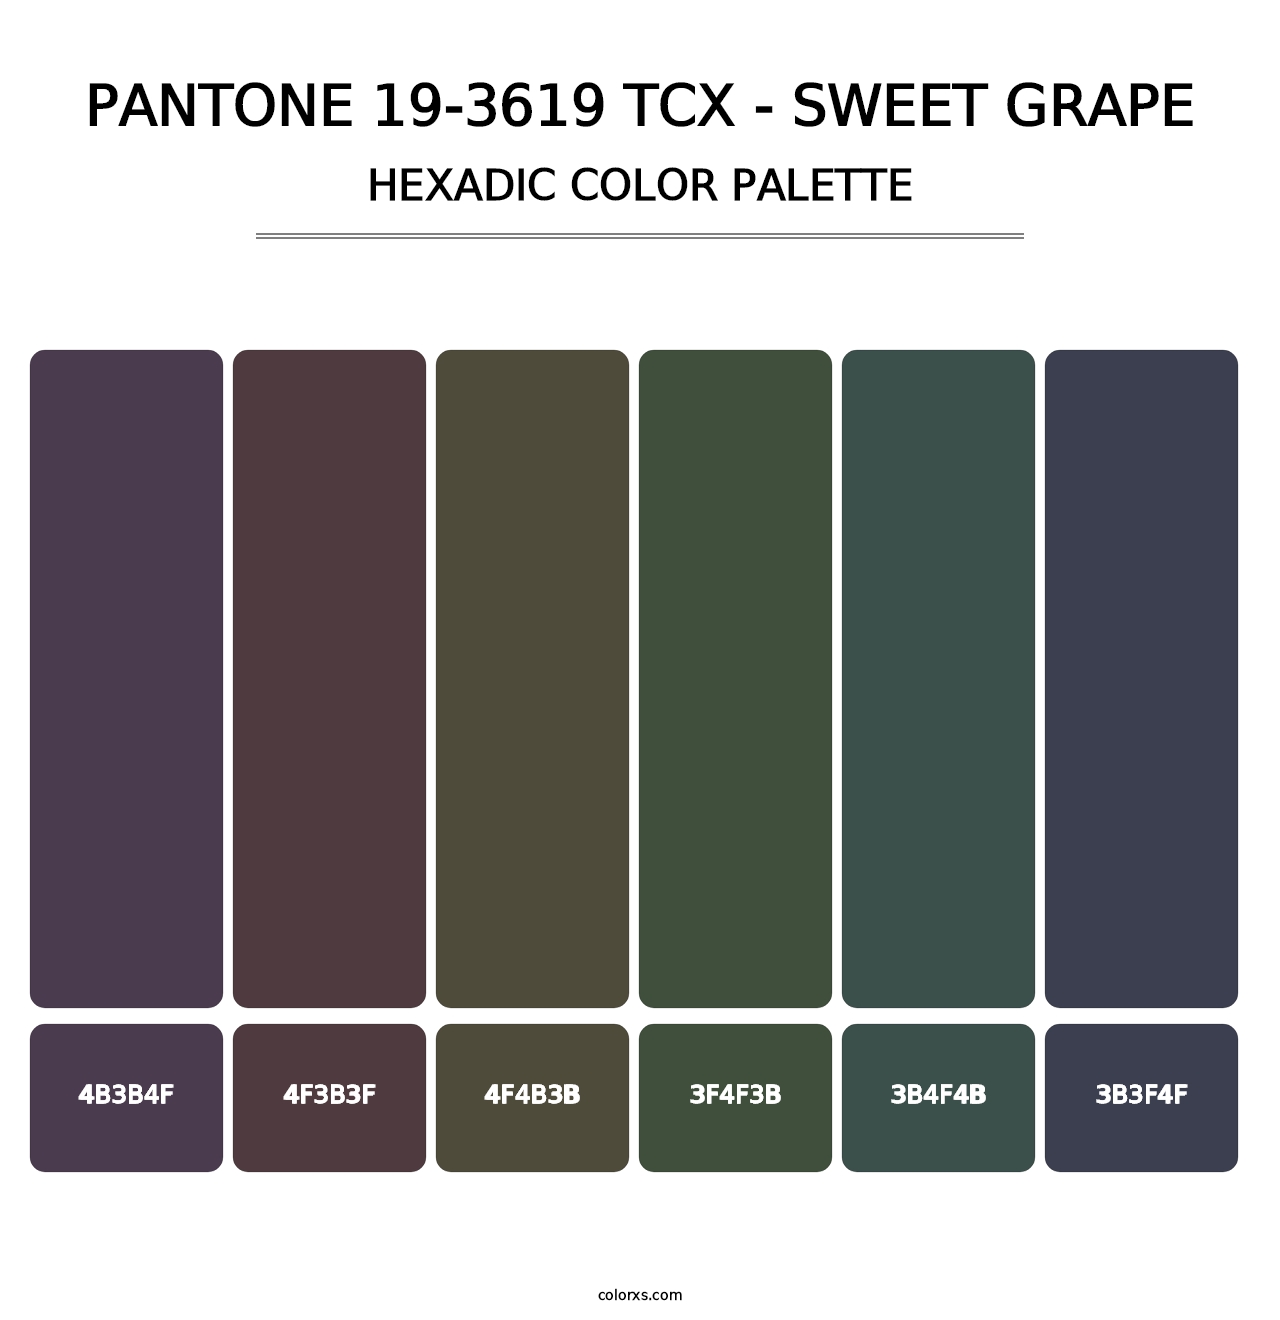 PANTONE 19-3619 TCX - Sweet Grape - Hexadic Color Palette